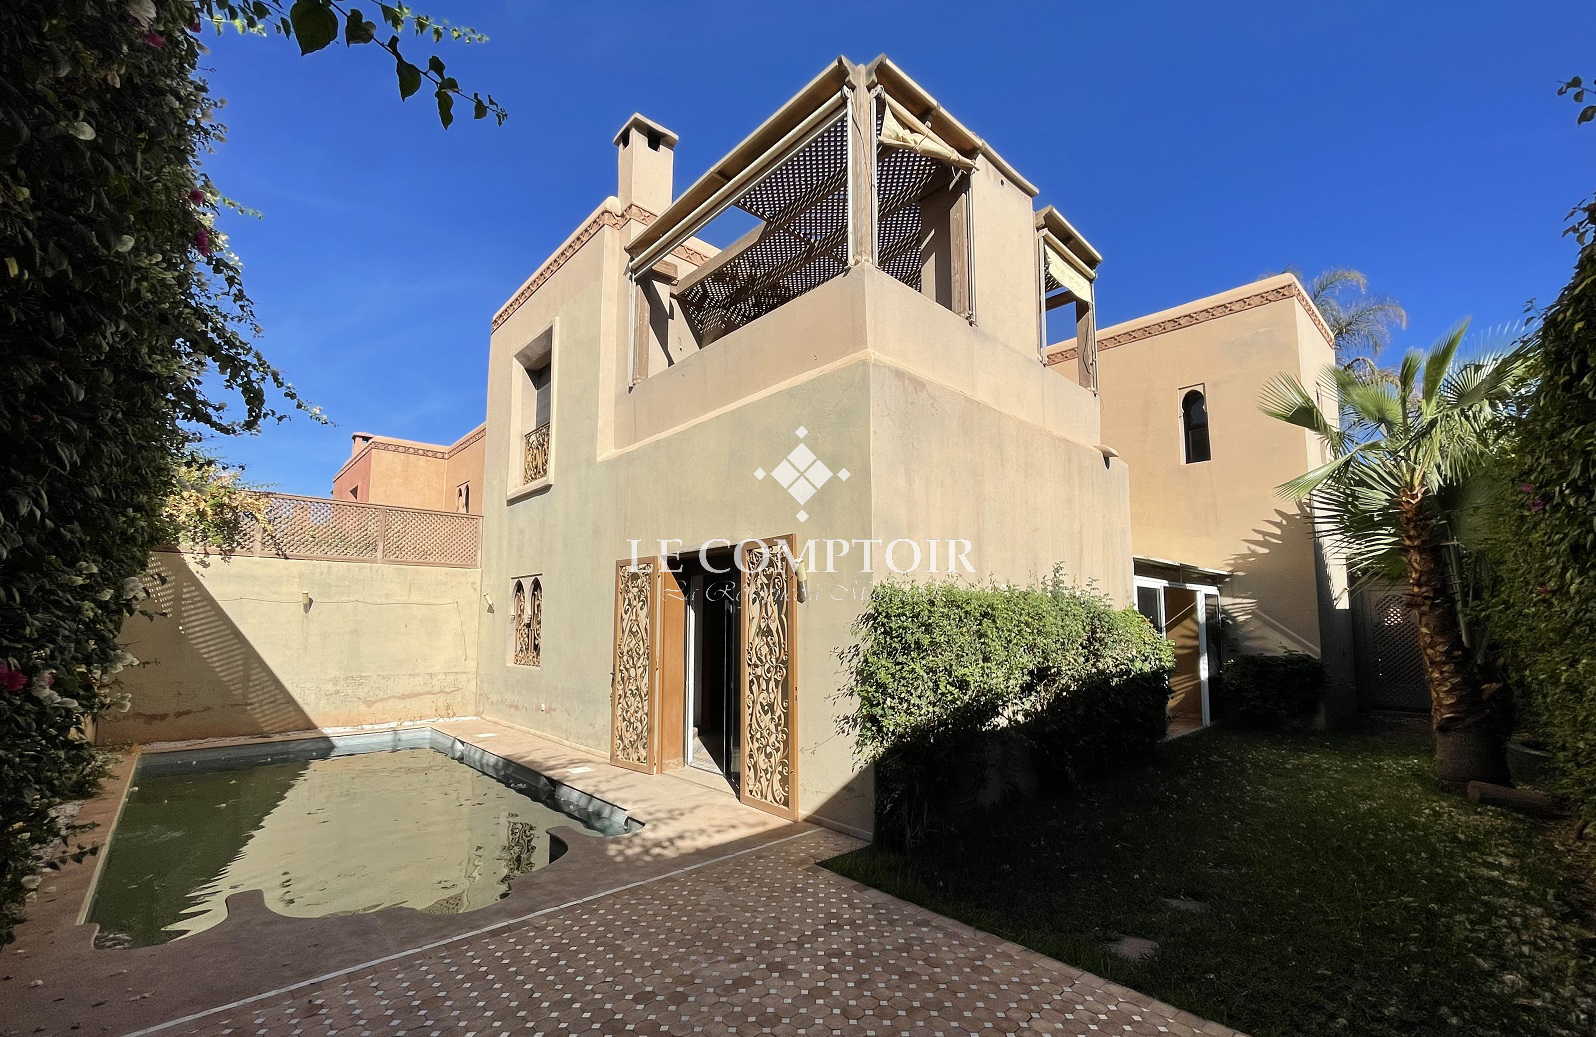 Le Comptoir Immobilier Agence Immobiliere Marrakech Villa Residence Non Meublee Location Marakech Maroc Piscine 1 2